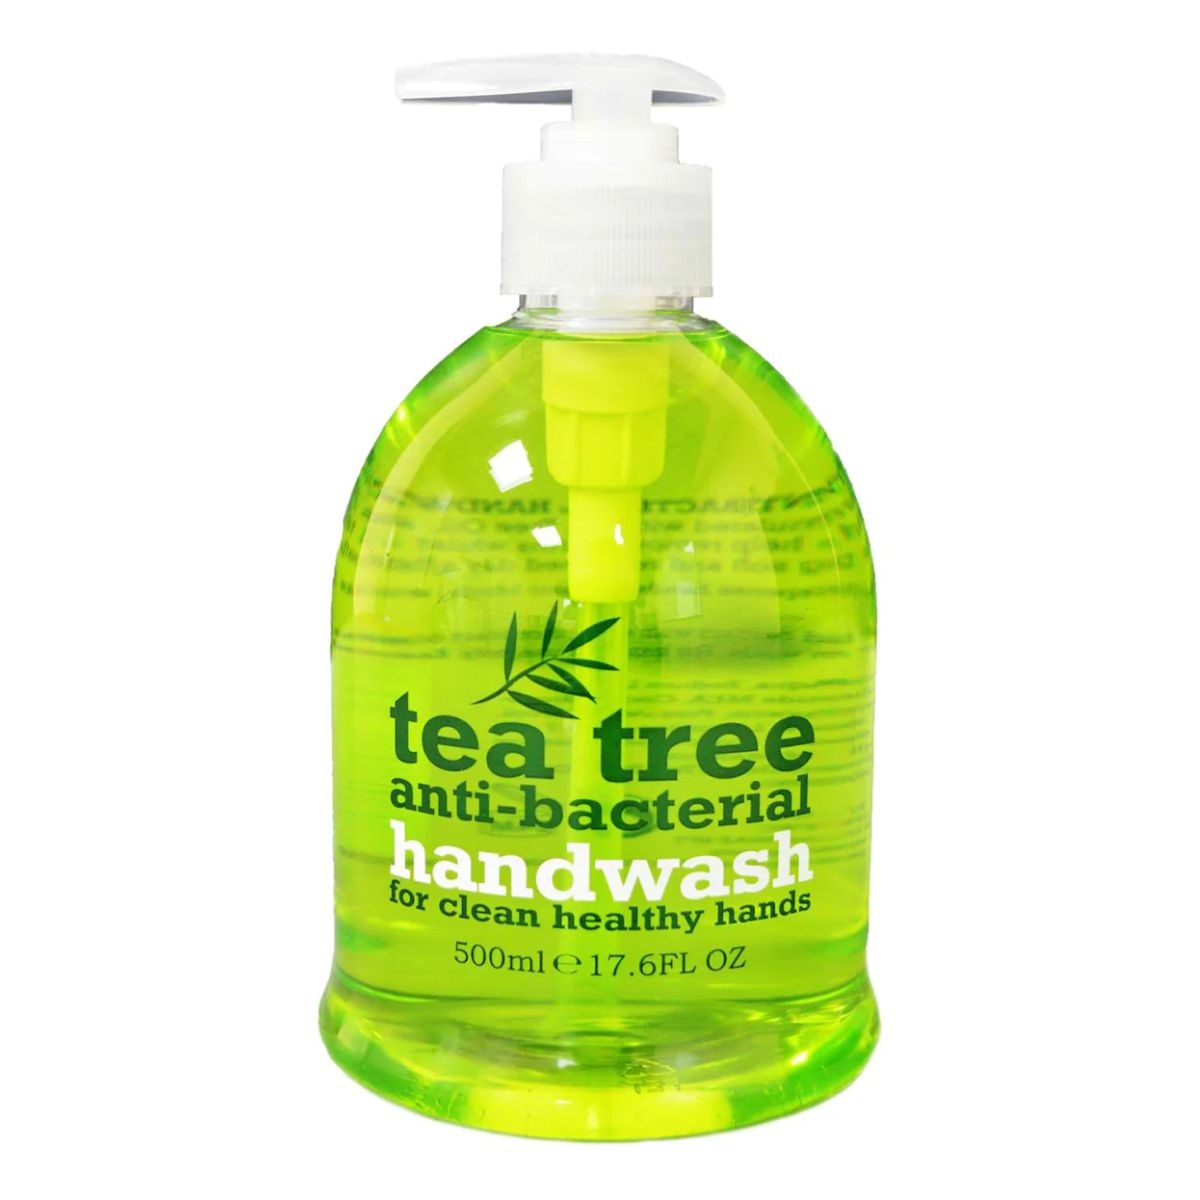 A bottle of Tea Tree - Anti-Bacterial Handwash - 500ml with a pump dispenser.